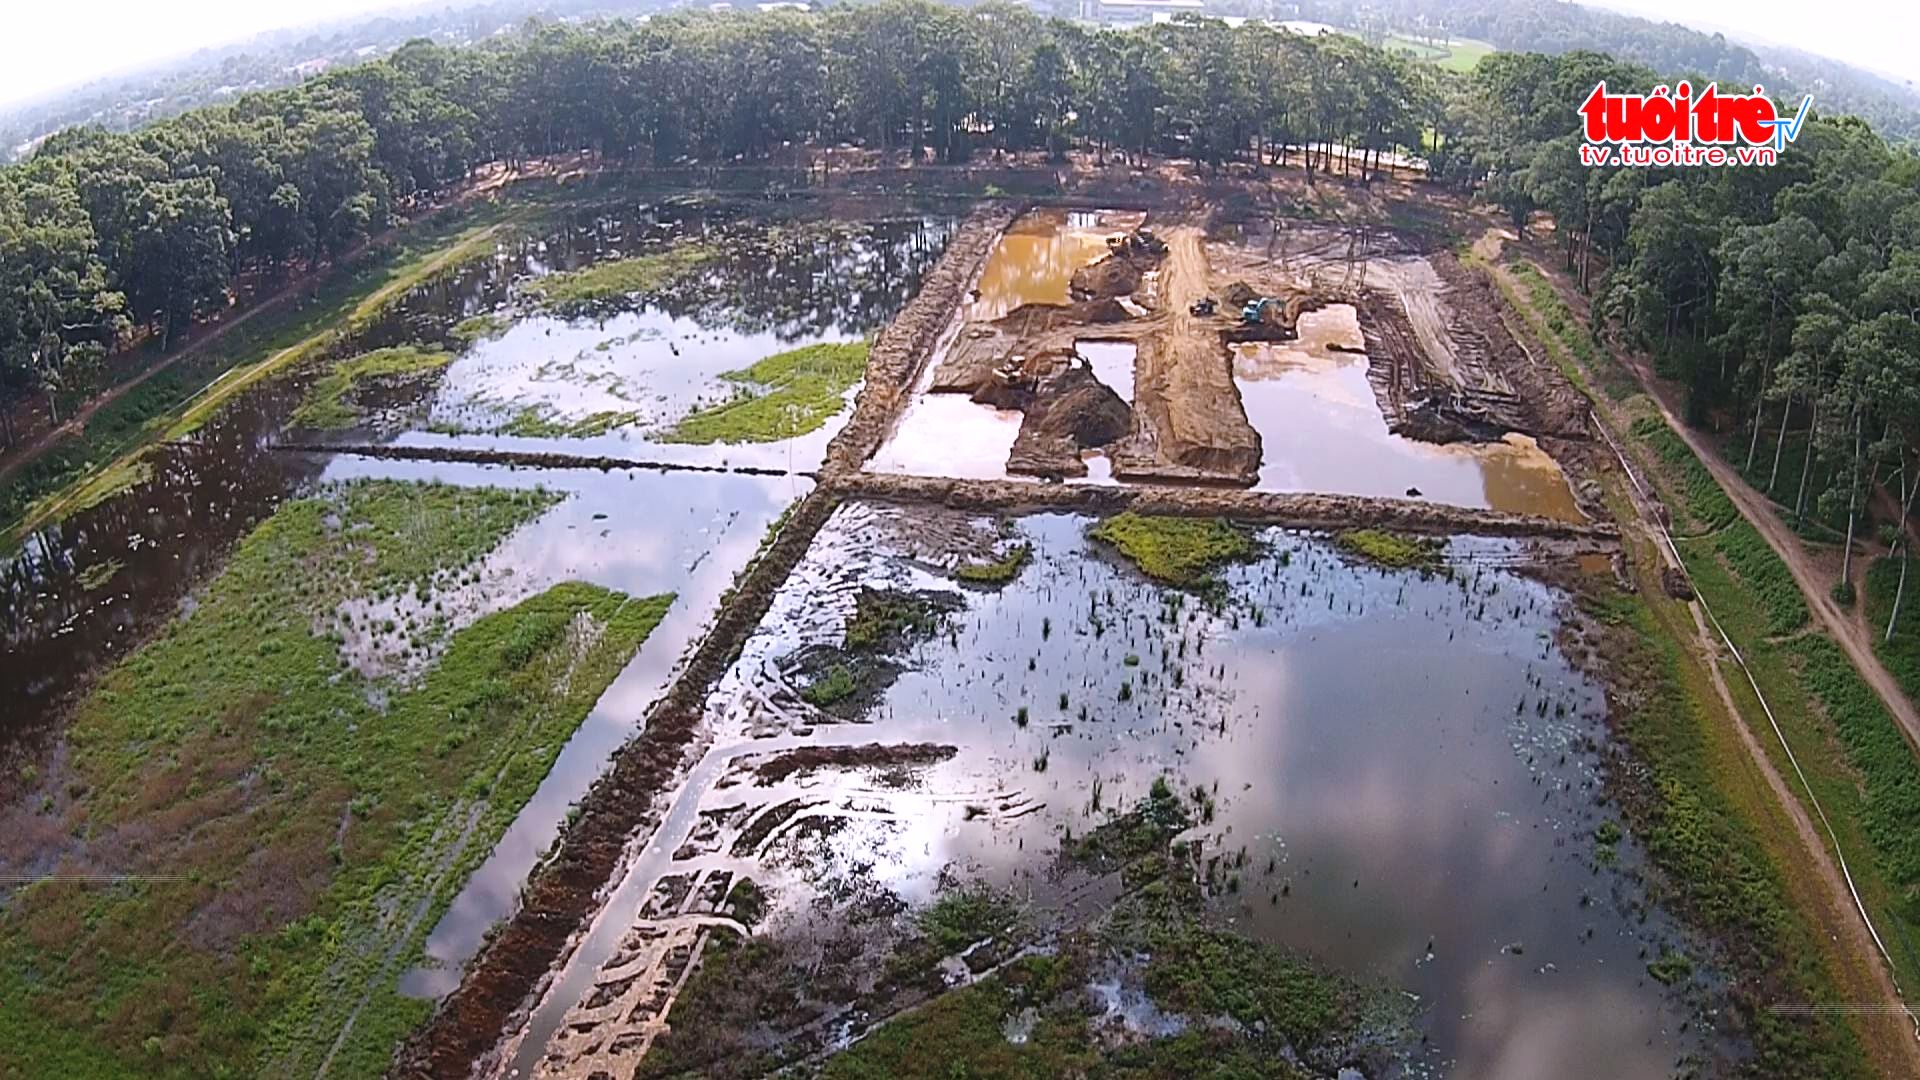 Restoring Ba Om Pond in Vietnam’s Tra Vinh Province